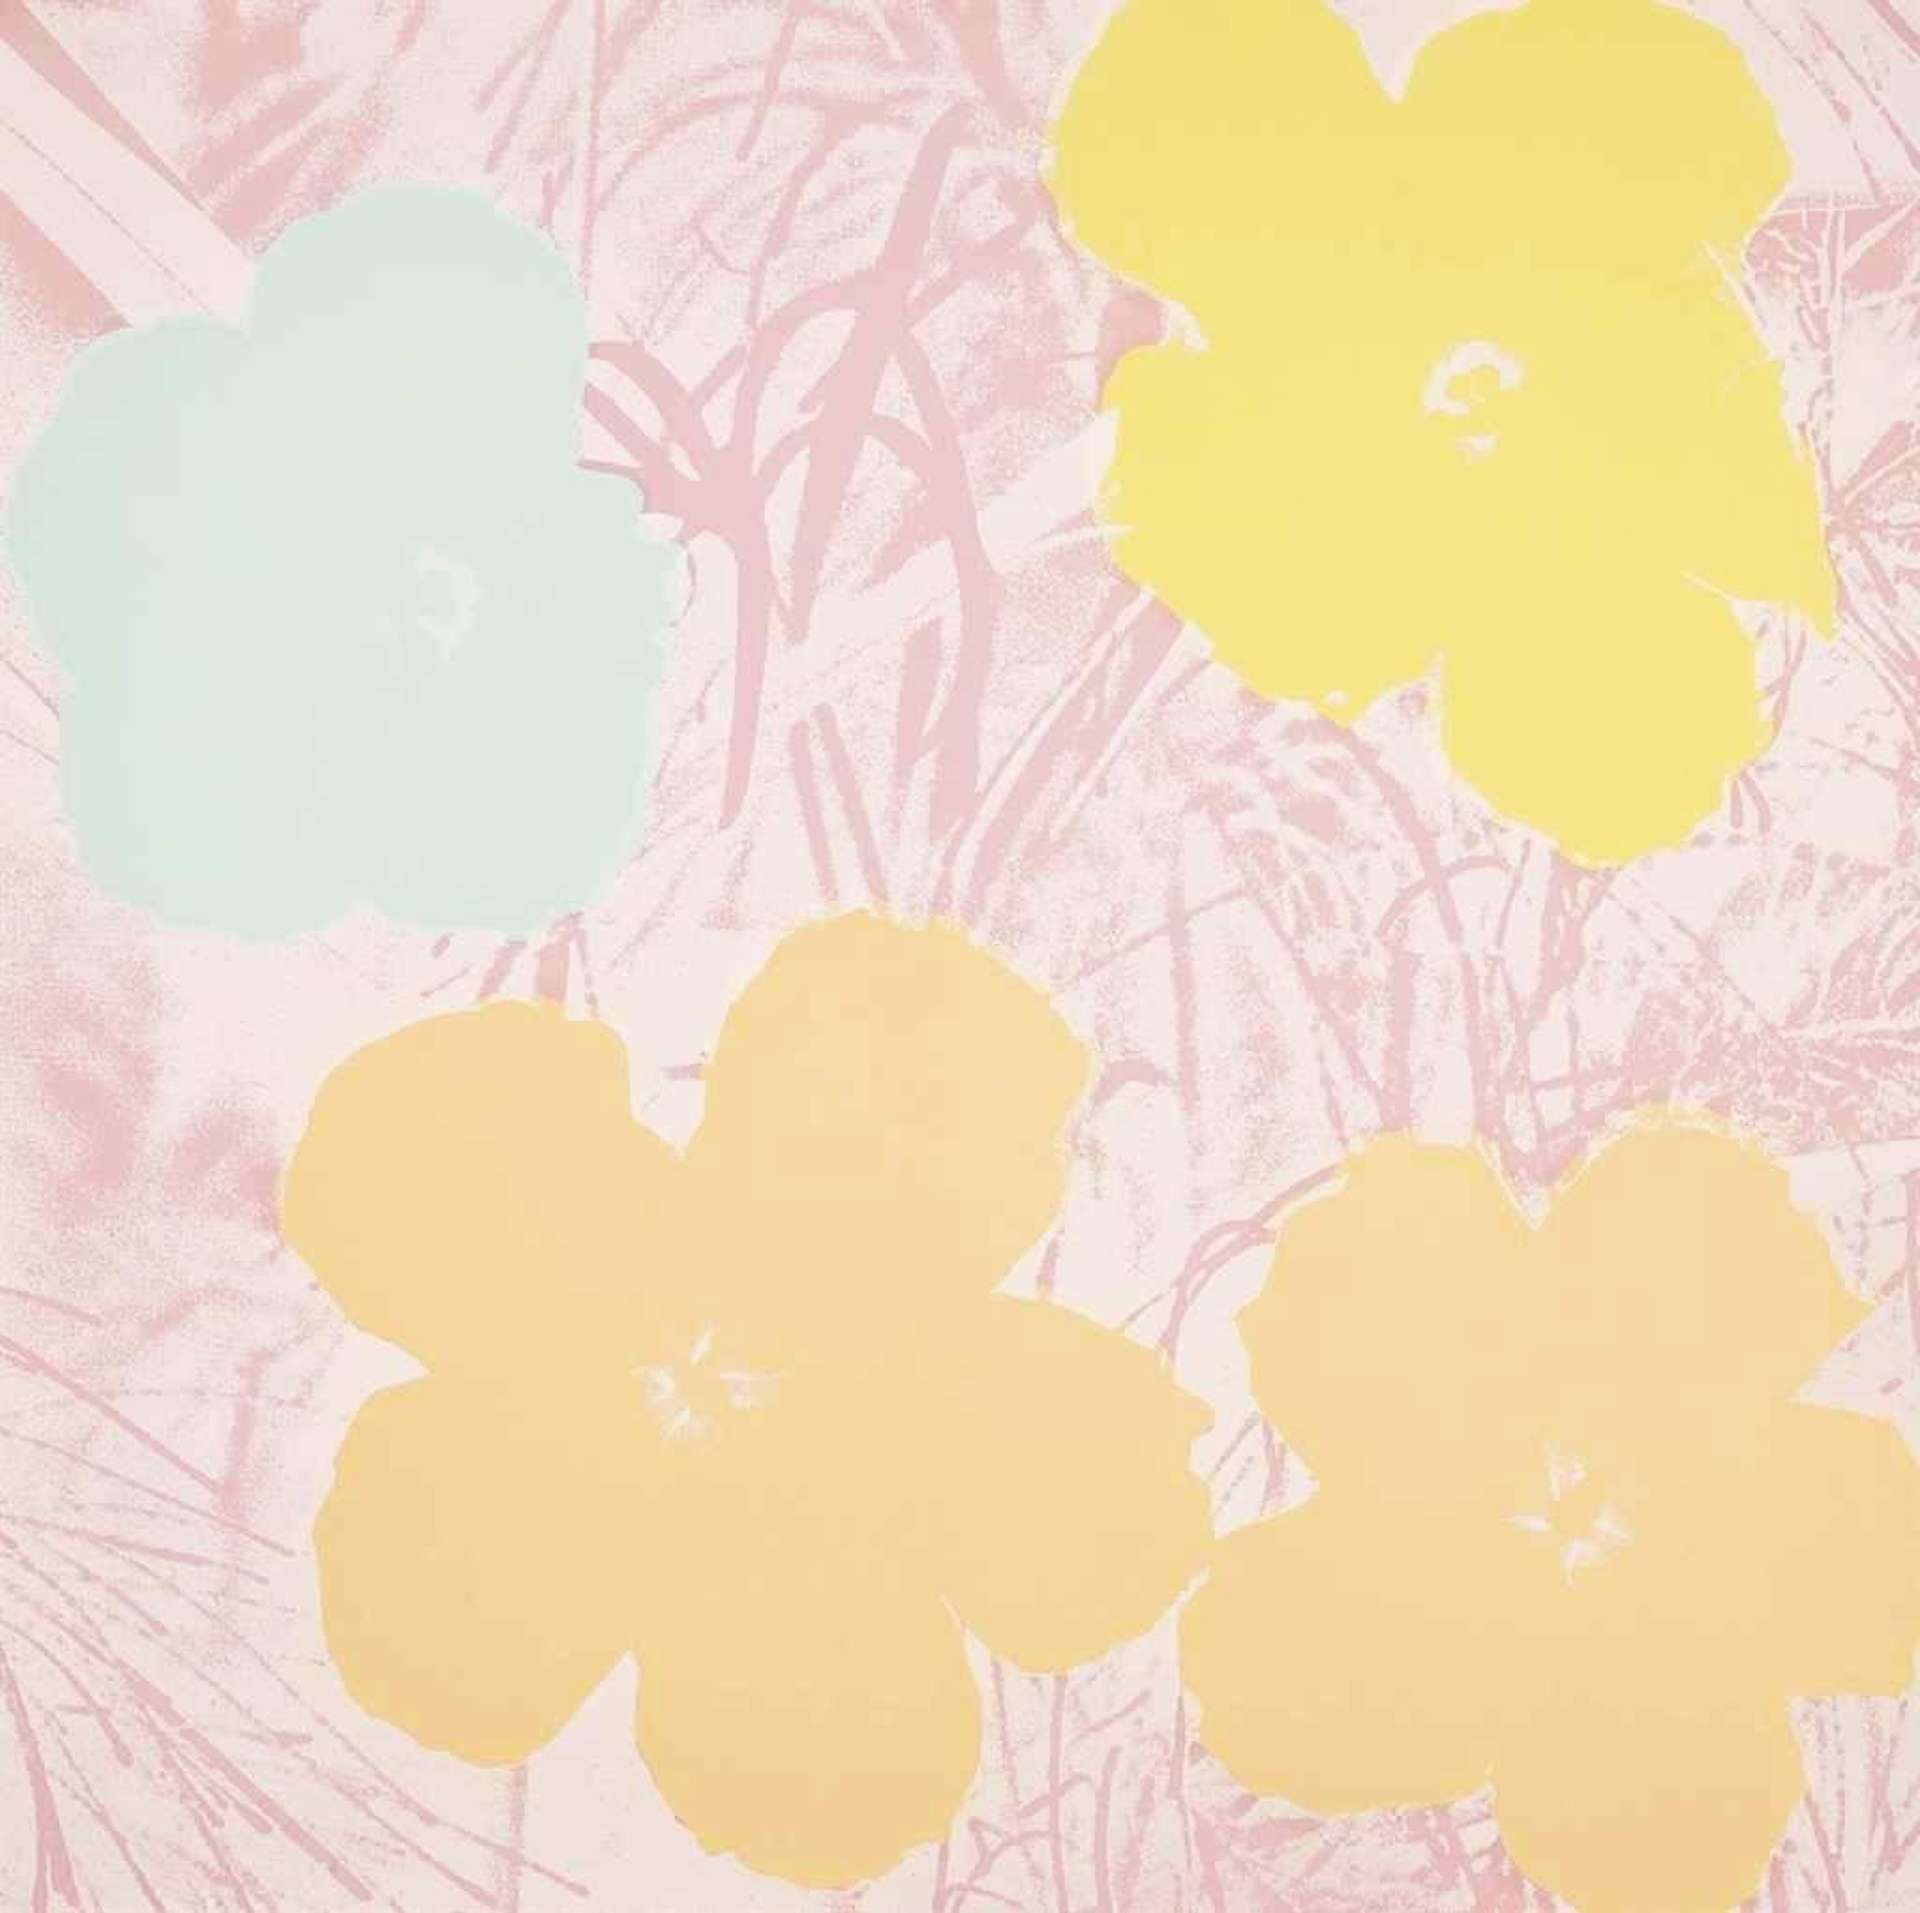 Flowers (F. & S. II.70) by Andy Warhol